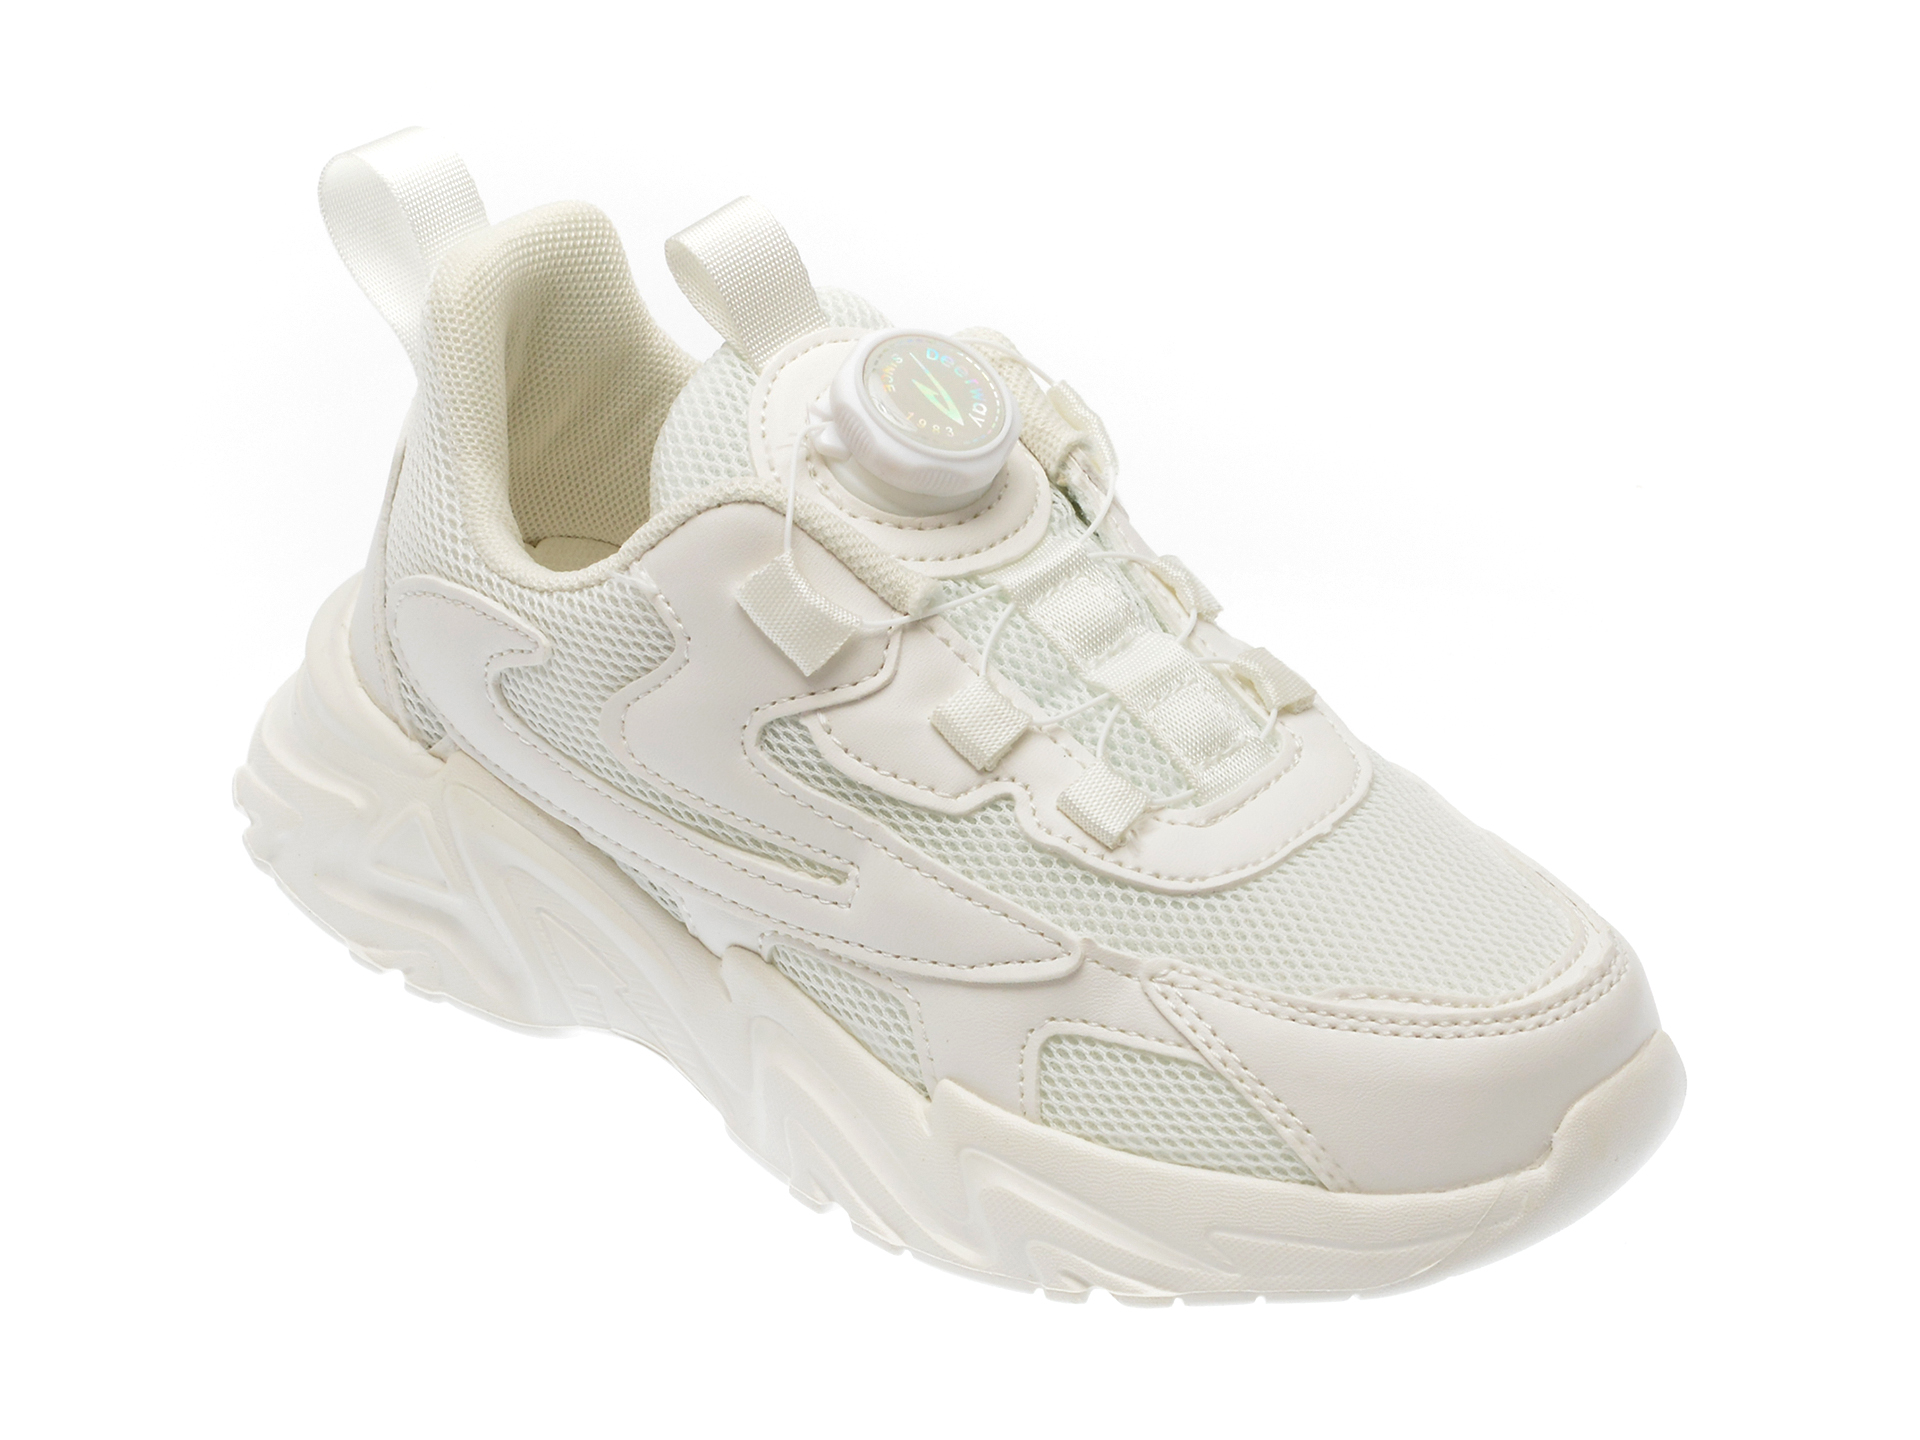 Pantofi sport DEERWAY albi, 2313, din material textil si piele ecologica